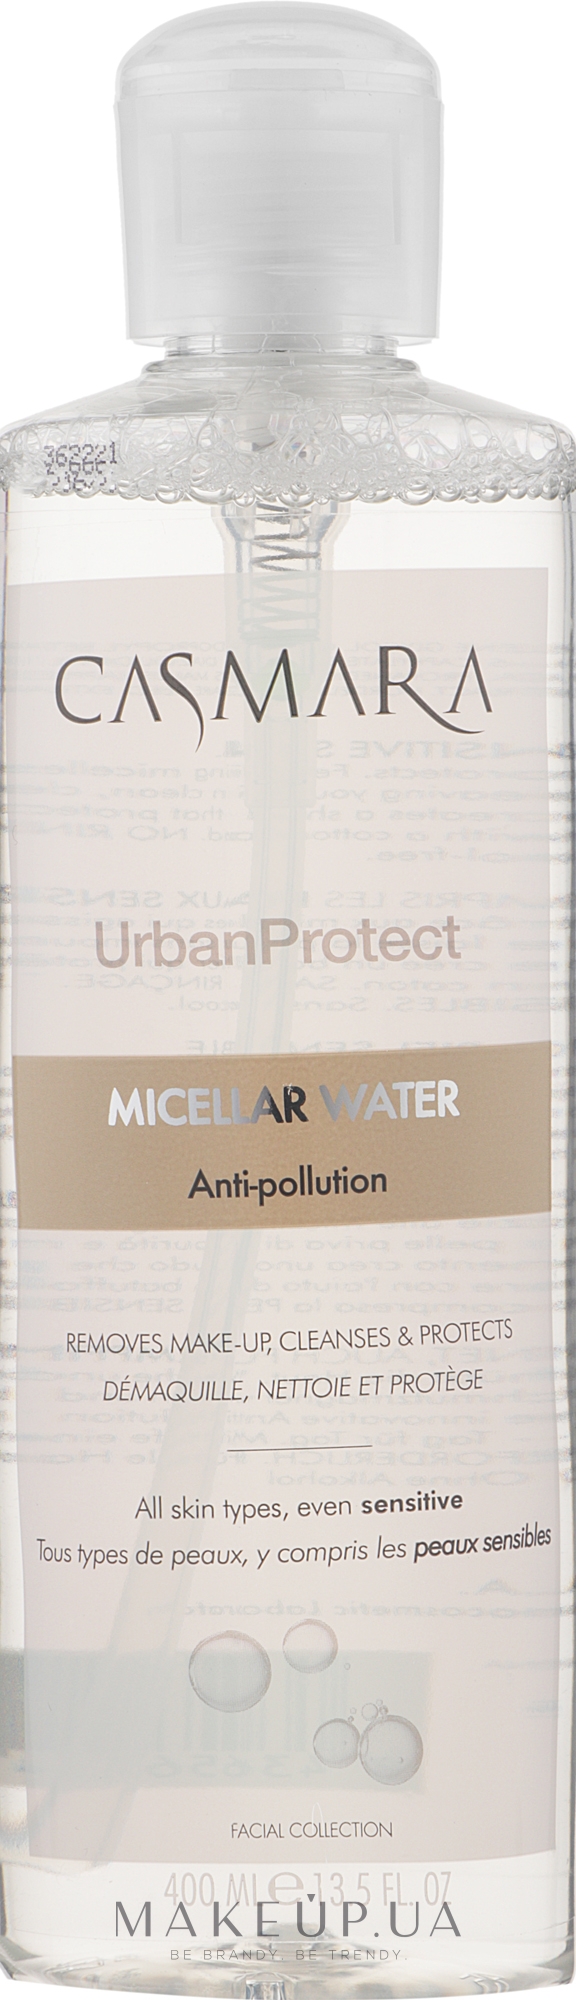 Мицеллярная вода для очищения и снятия макияжа - Casmara Urban Protect Micellar Water  — фото 400ml